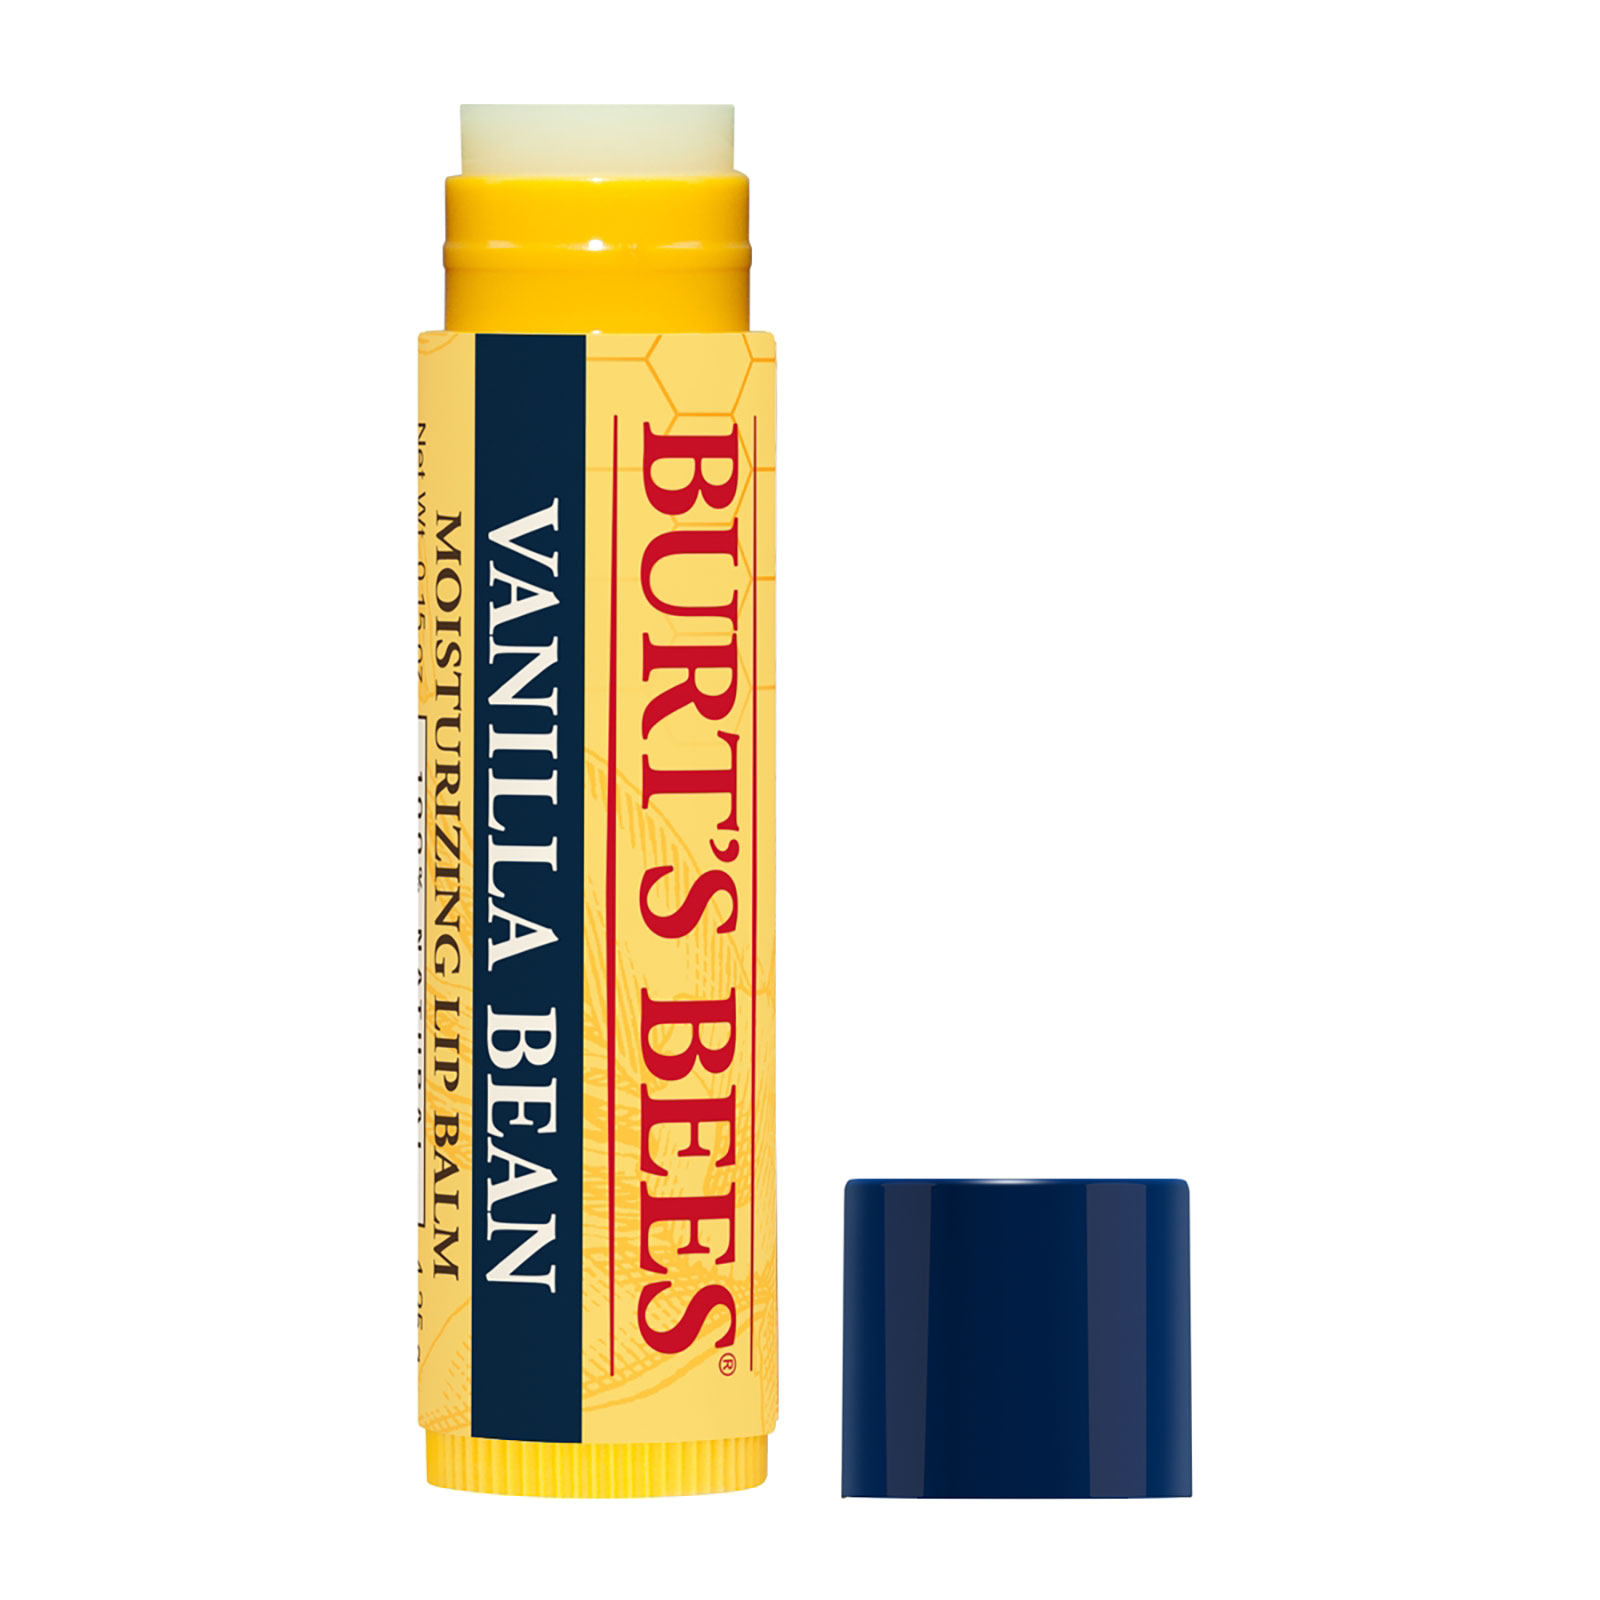 Burt's Bees - Burt’s bees® vanilla bean lip balm 4.25g